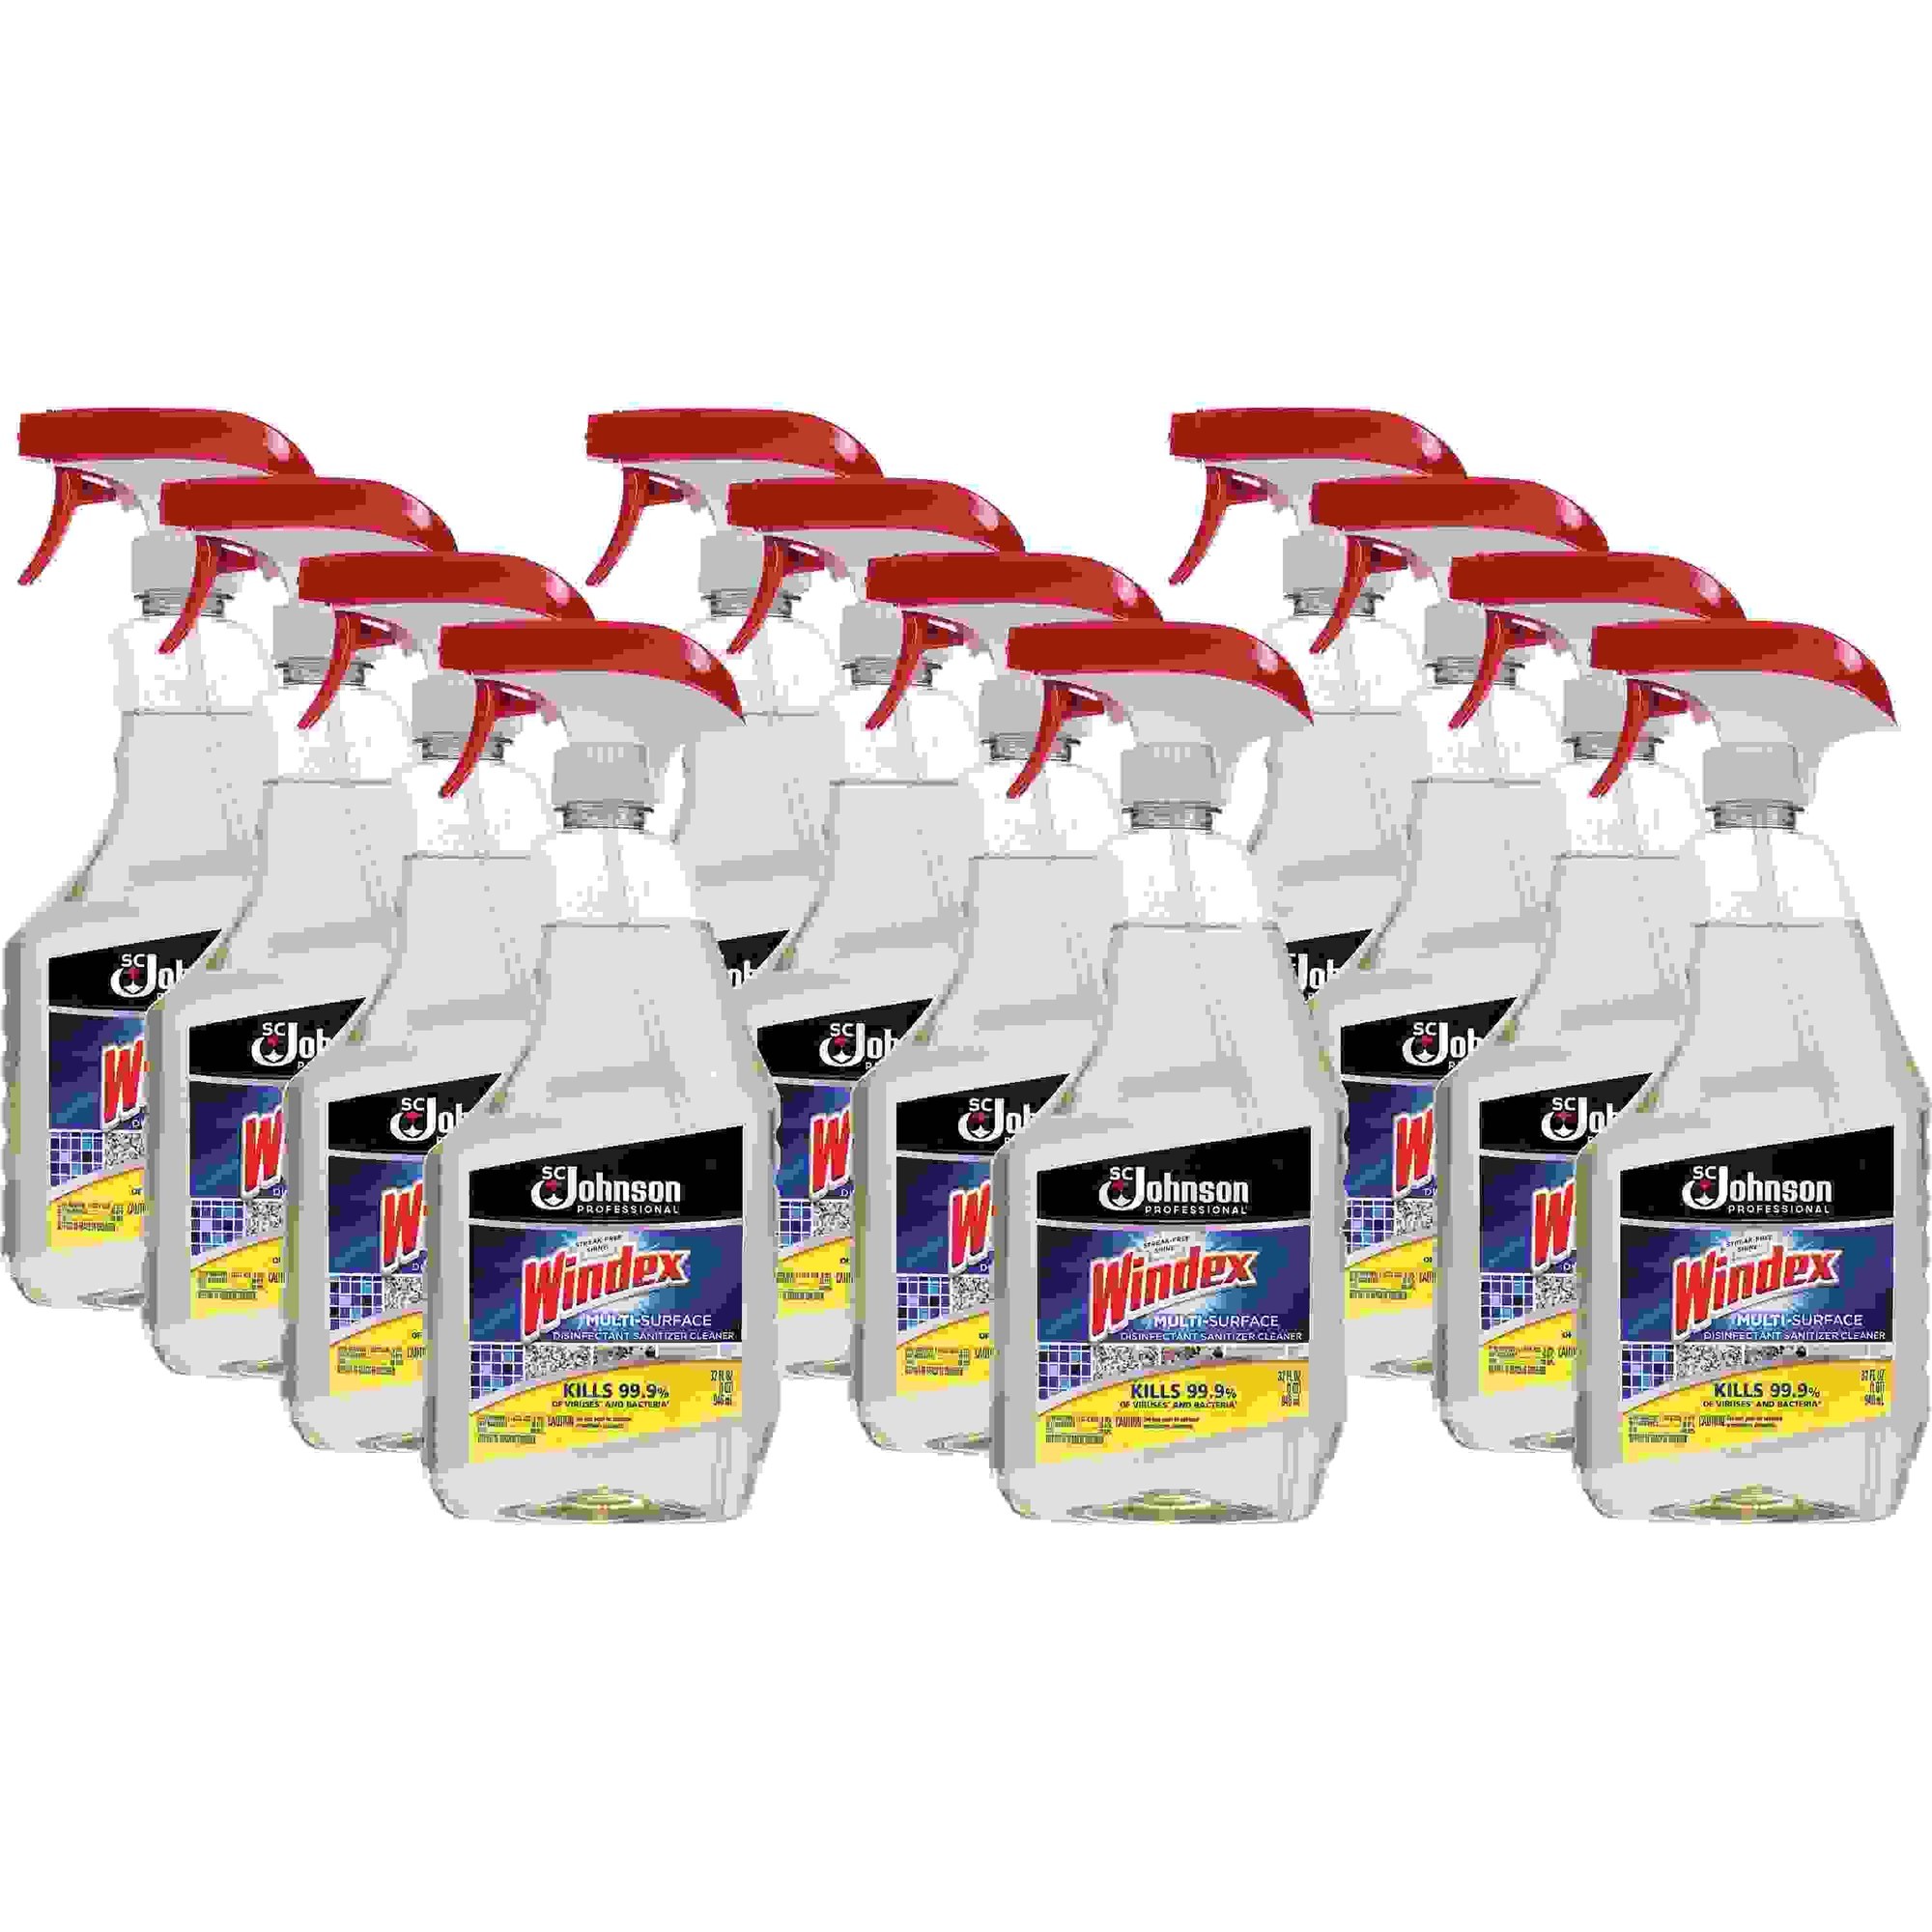 Multi-Surface Disinfectant Cleaner, Citrus Scent, 32 oz Bottle